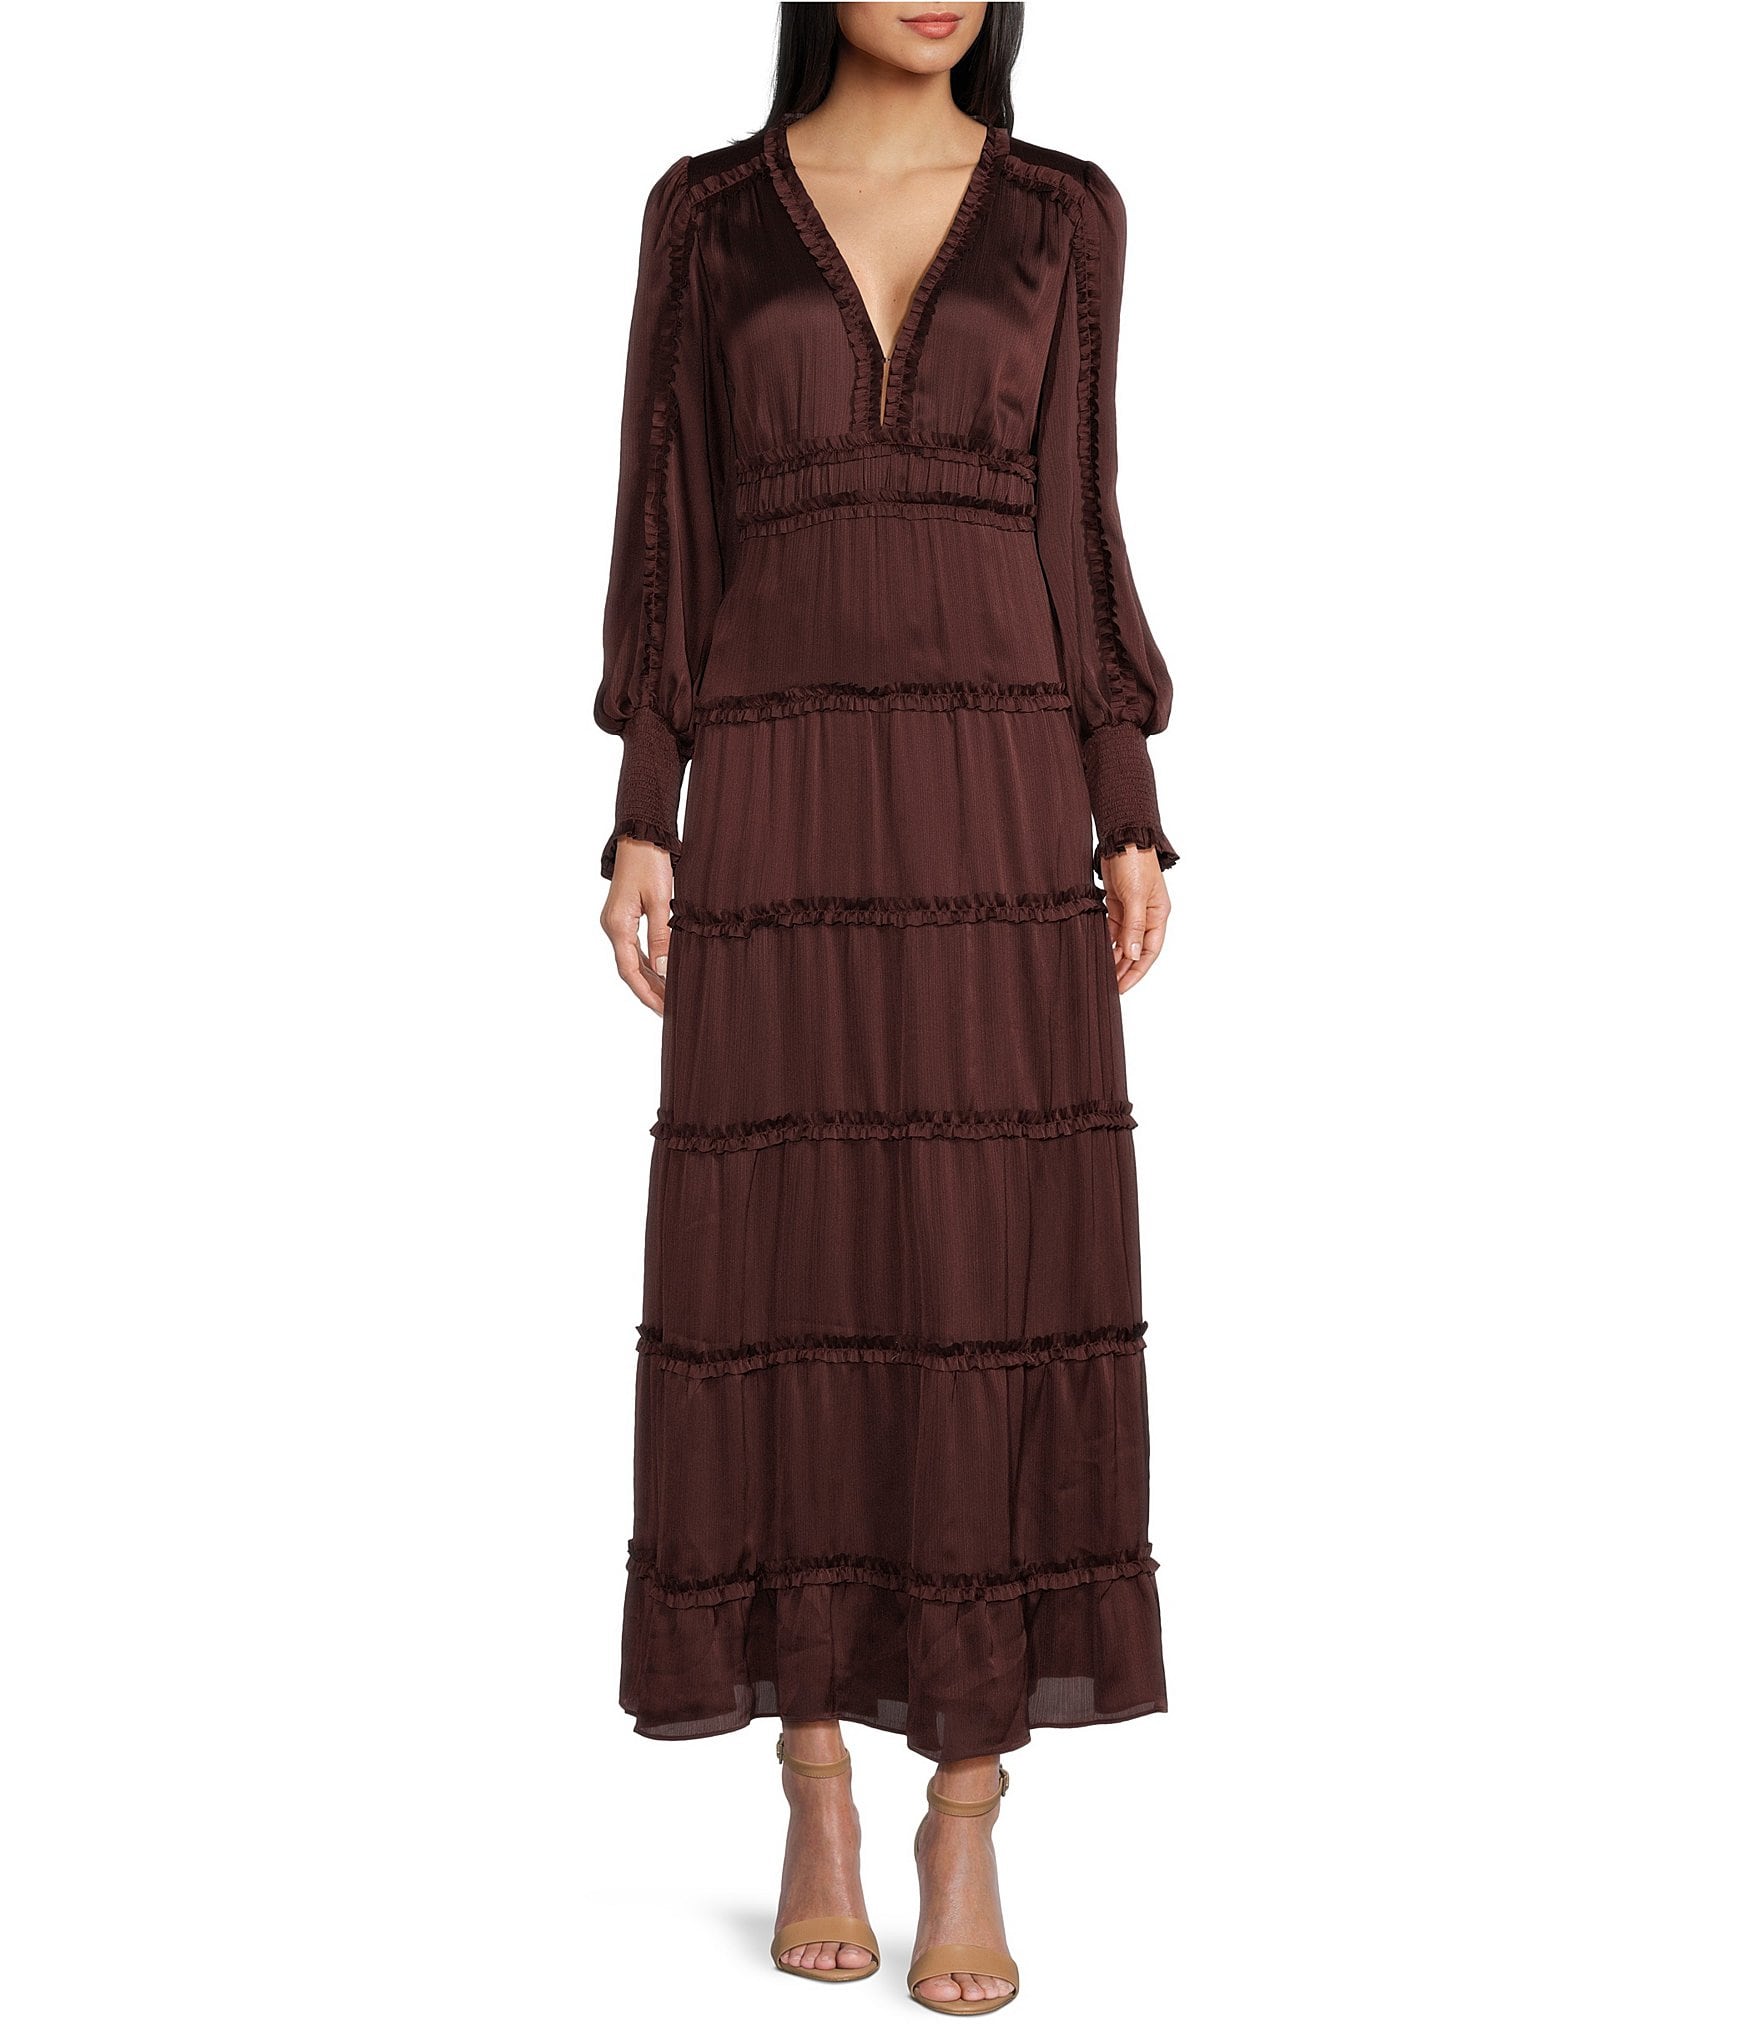 Six Ways to Wear a Brown Midi Dress - Lady in VioletLady in Violet